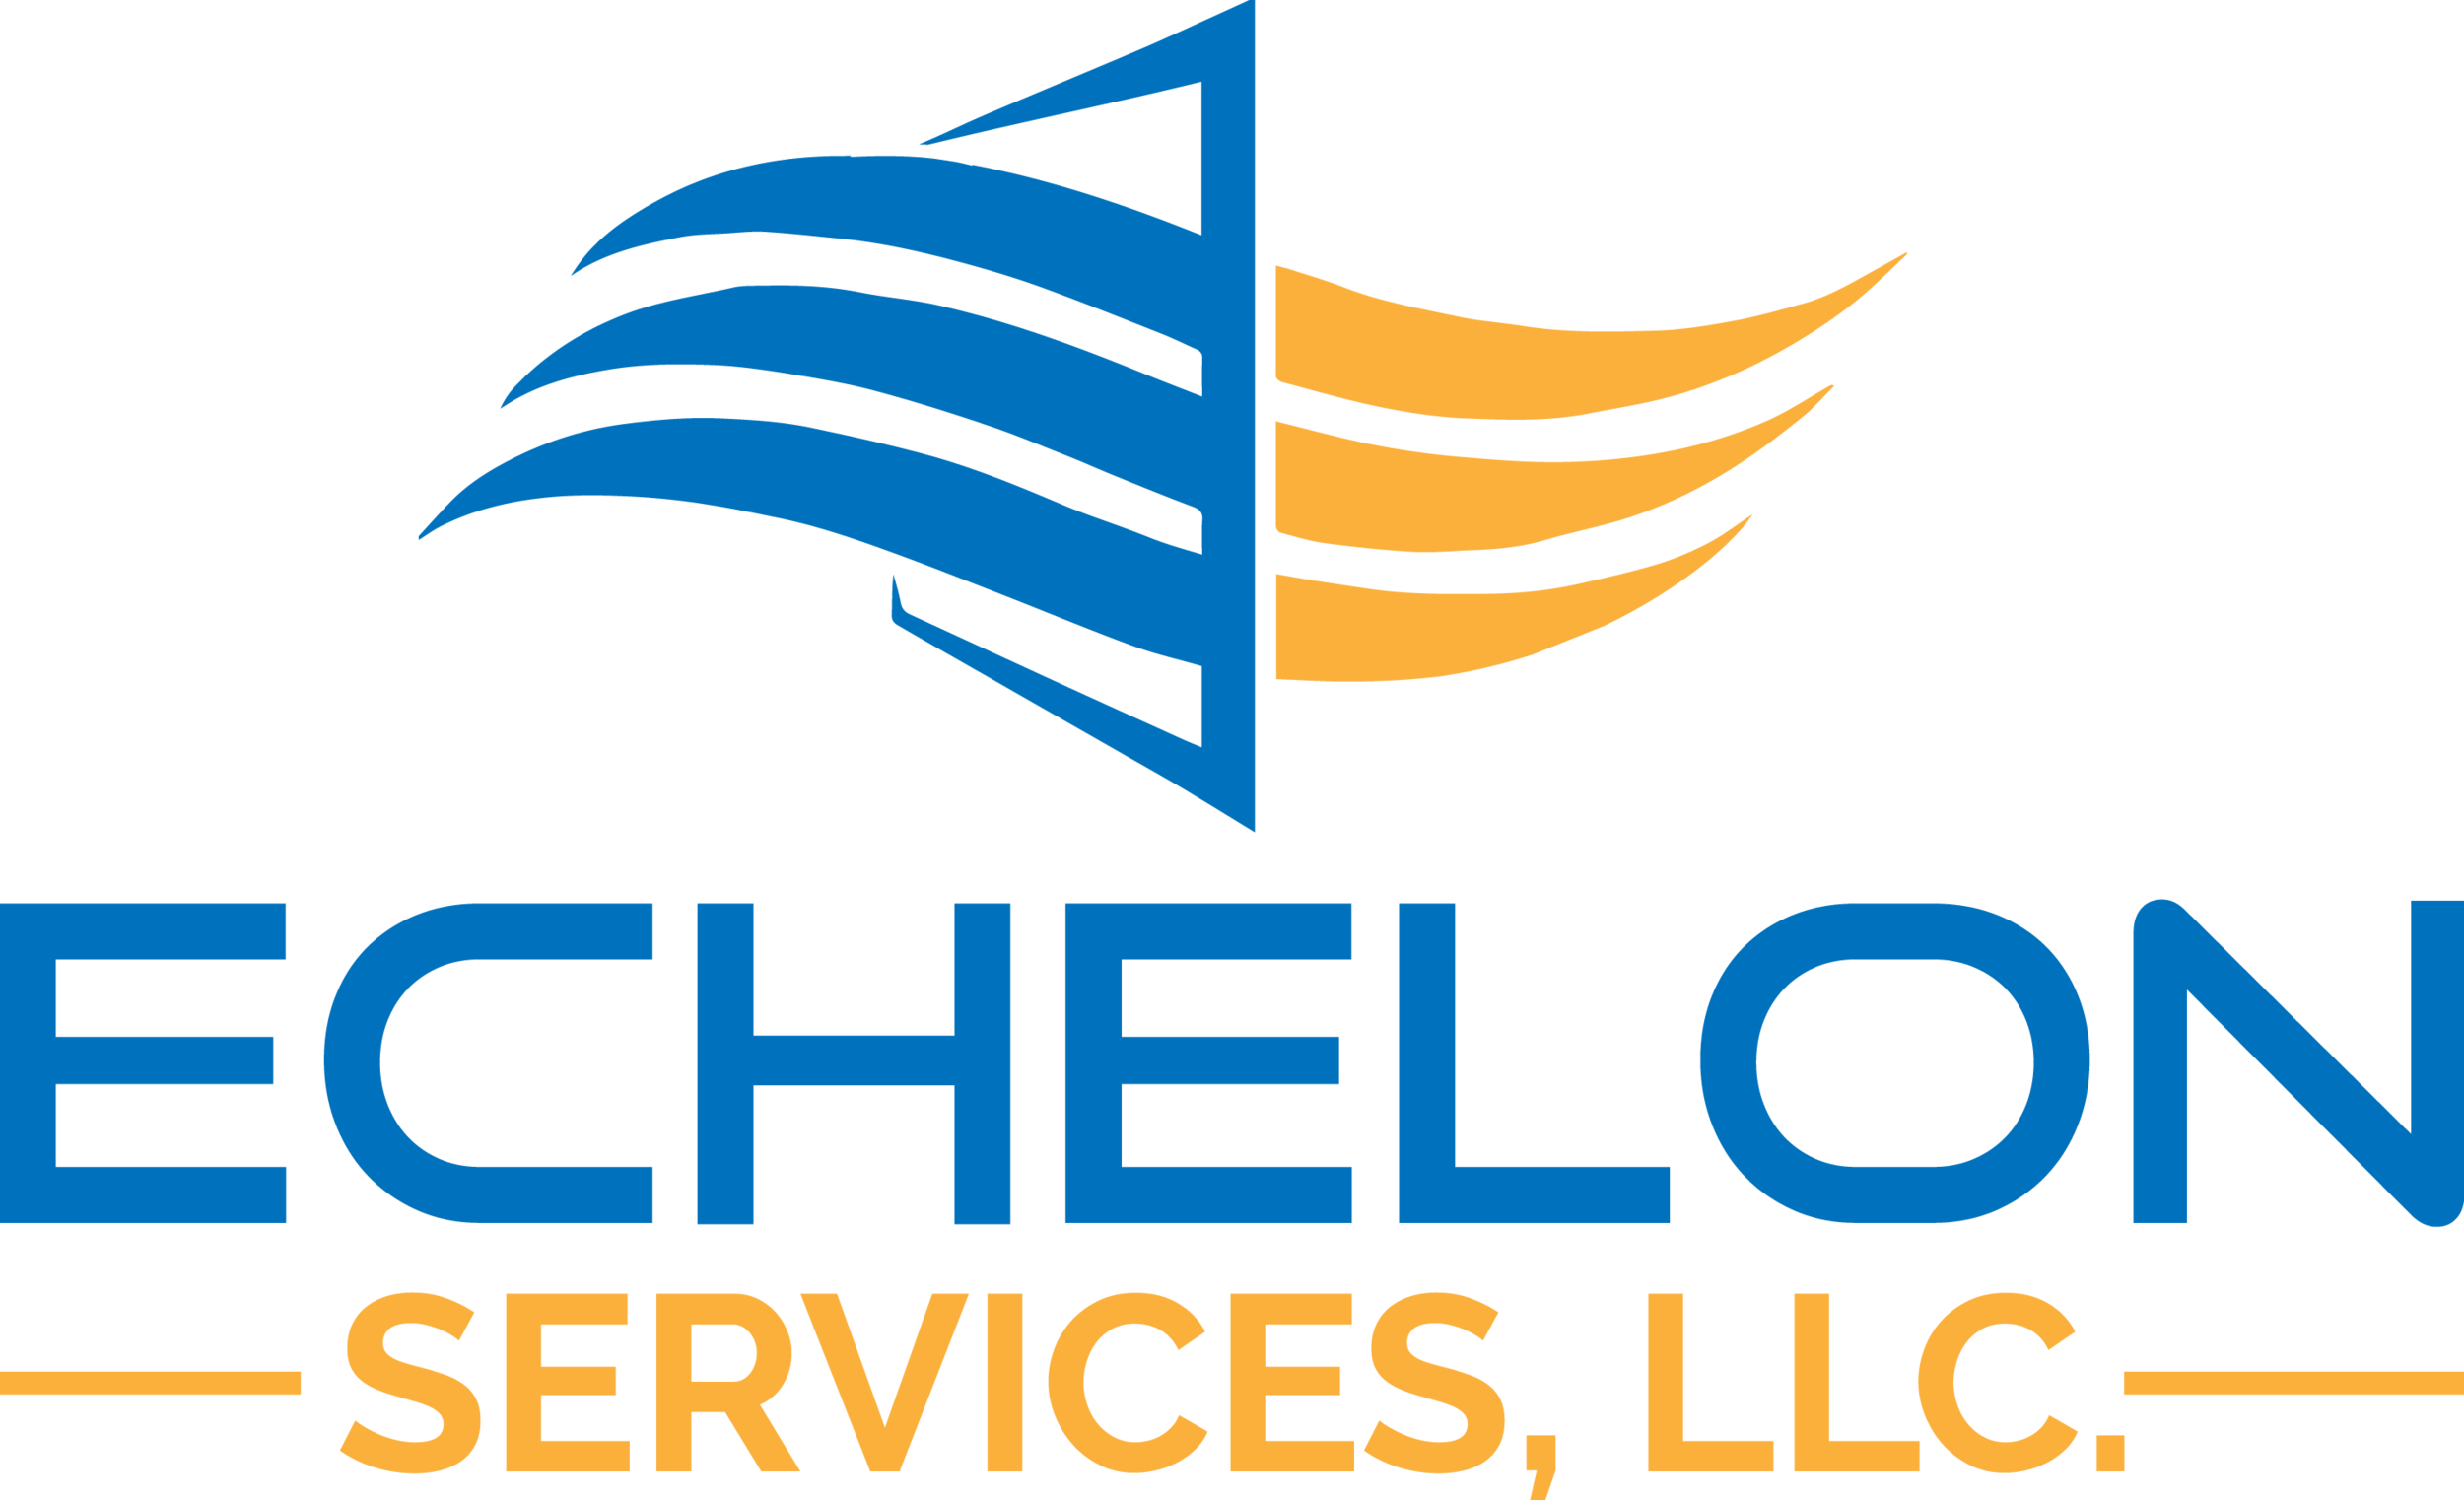 Echelon Services, LLC.